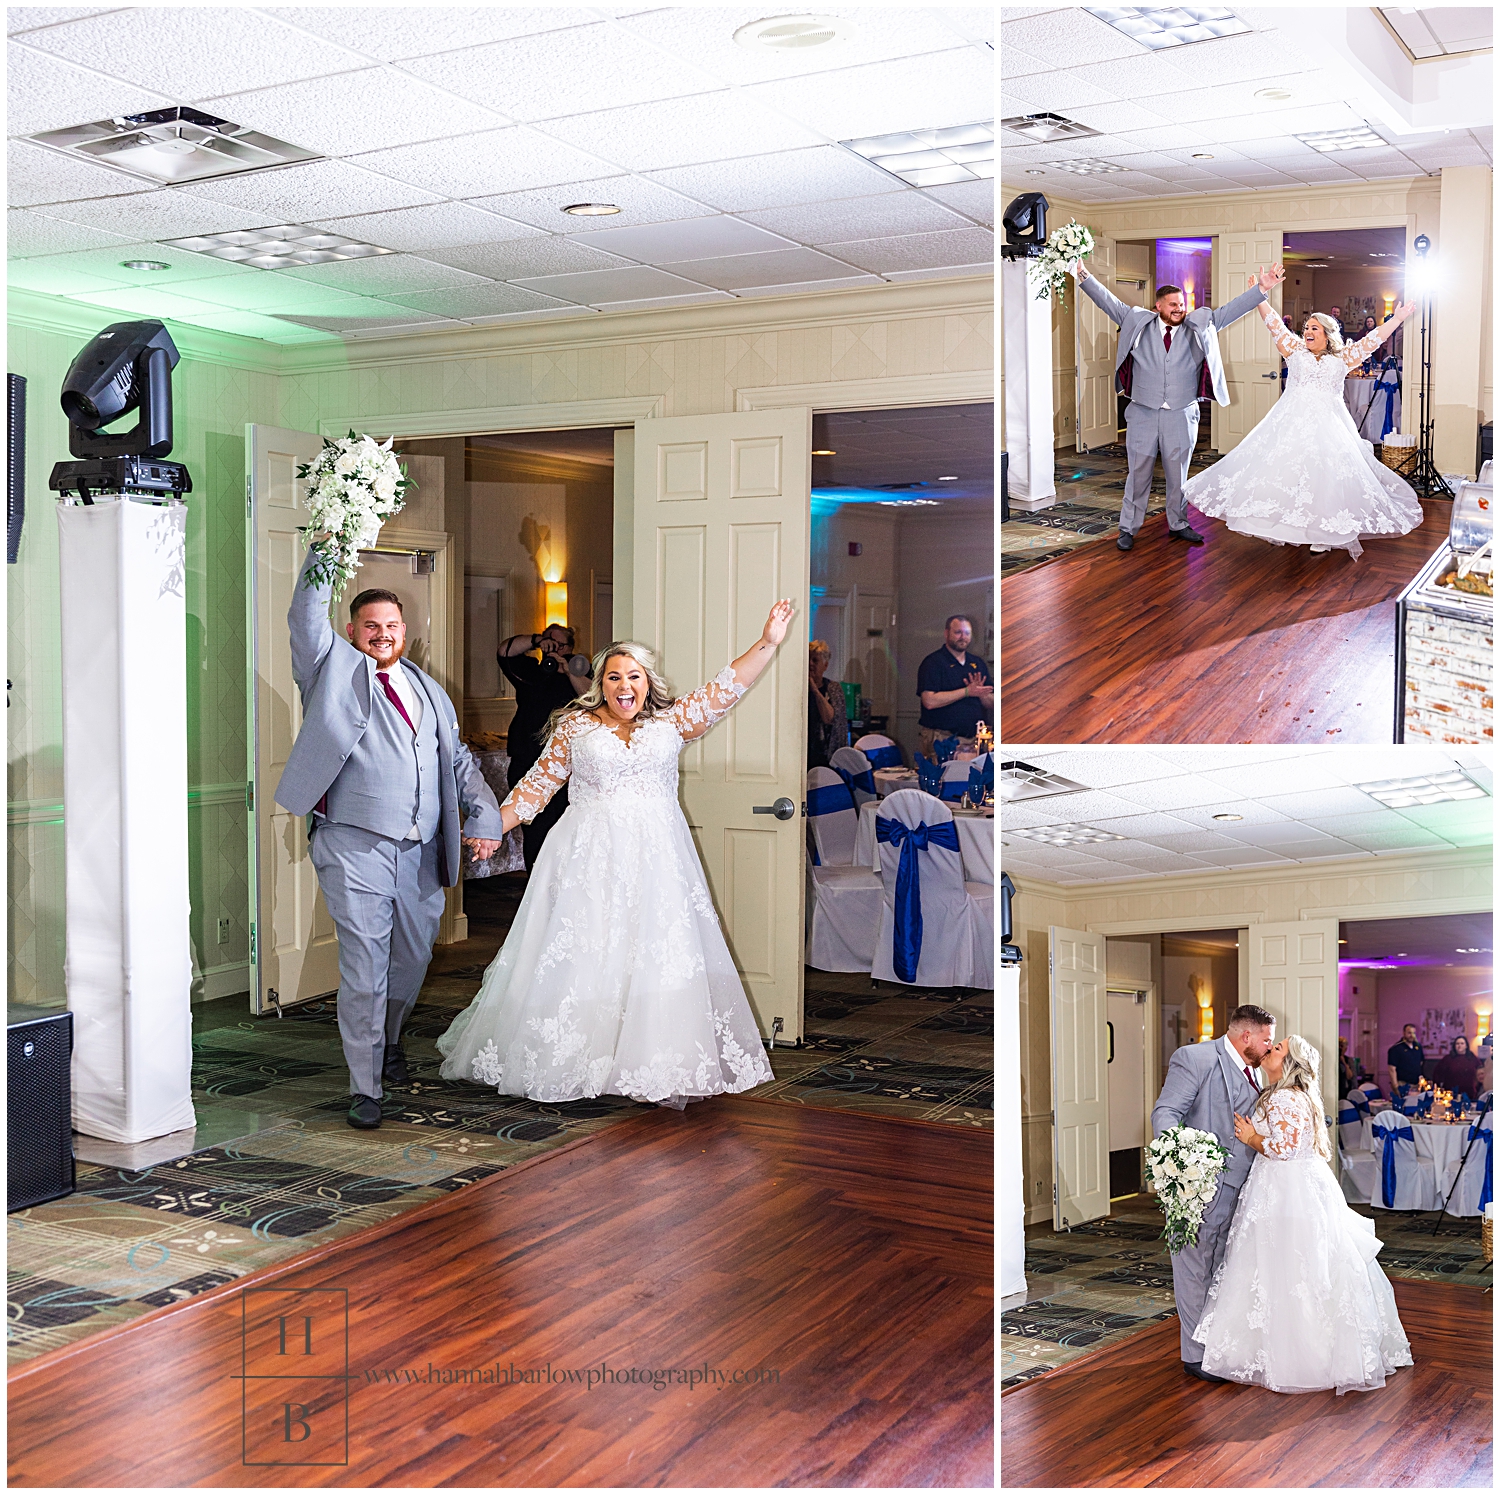 Couple Enters Weirton Holiday Inn for Wedding Reception